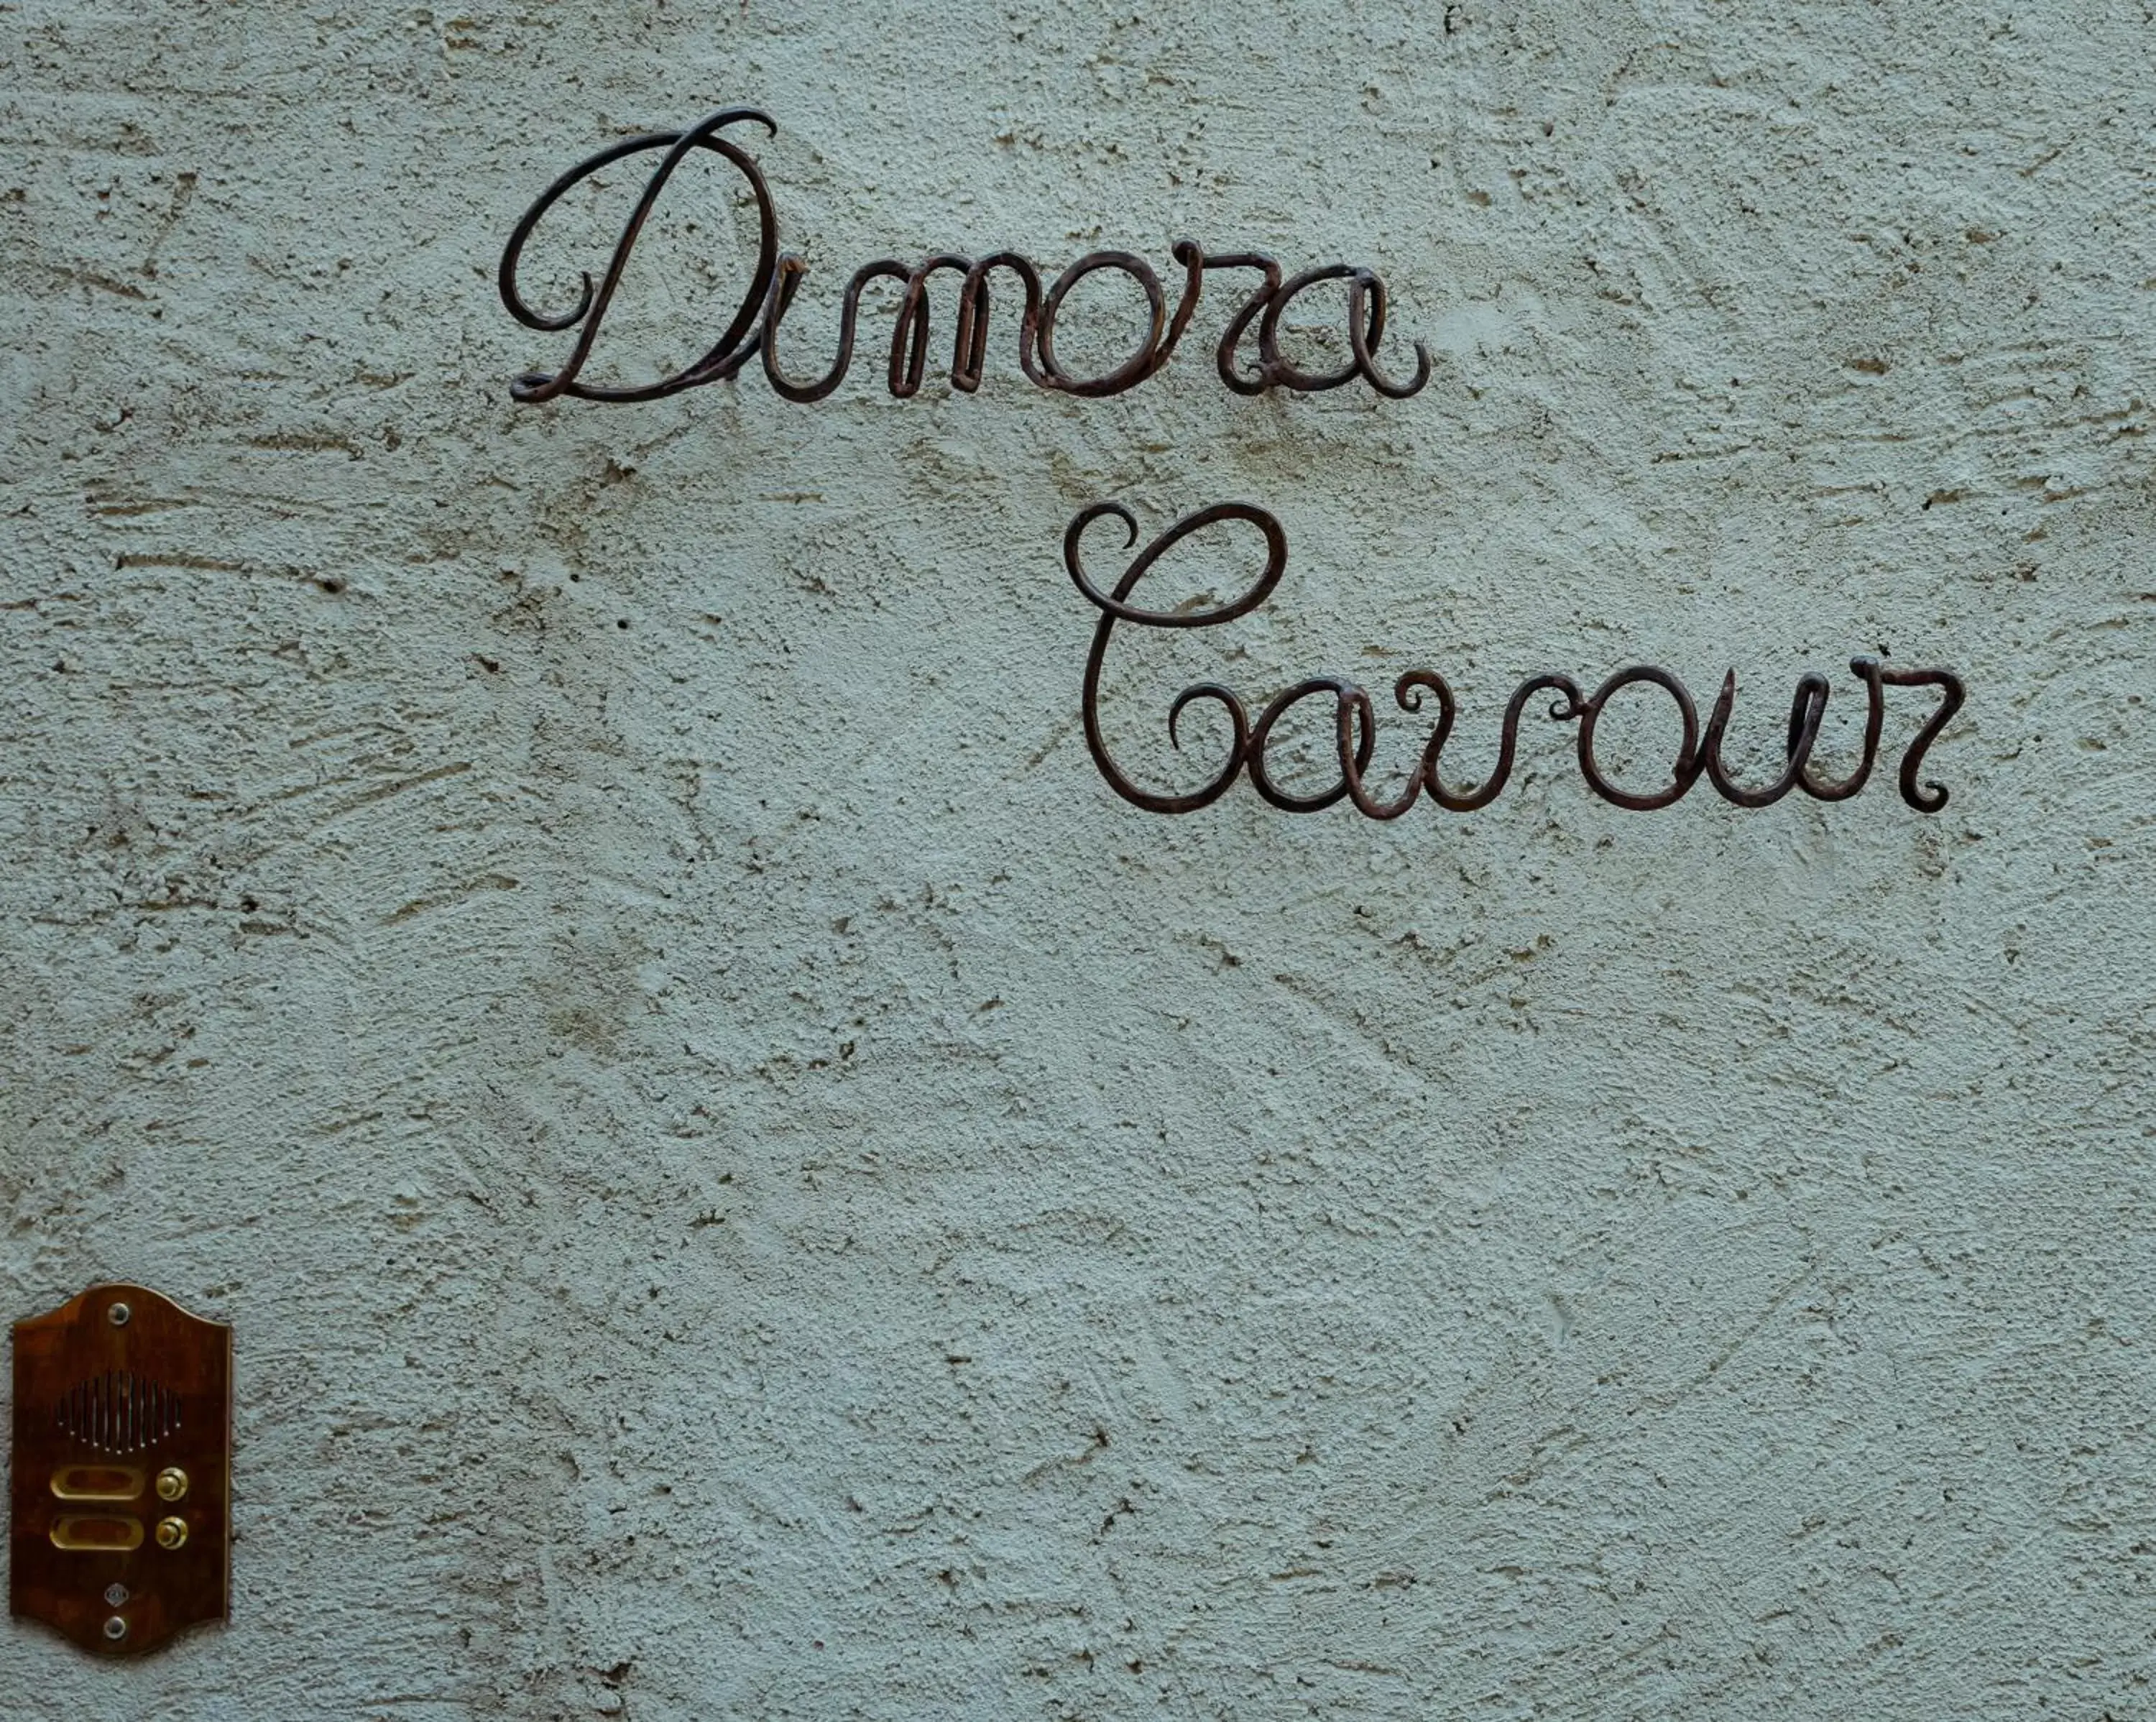 Dimora Cavour